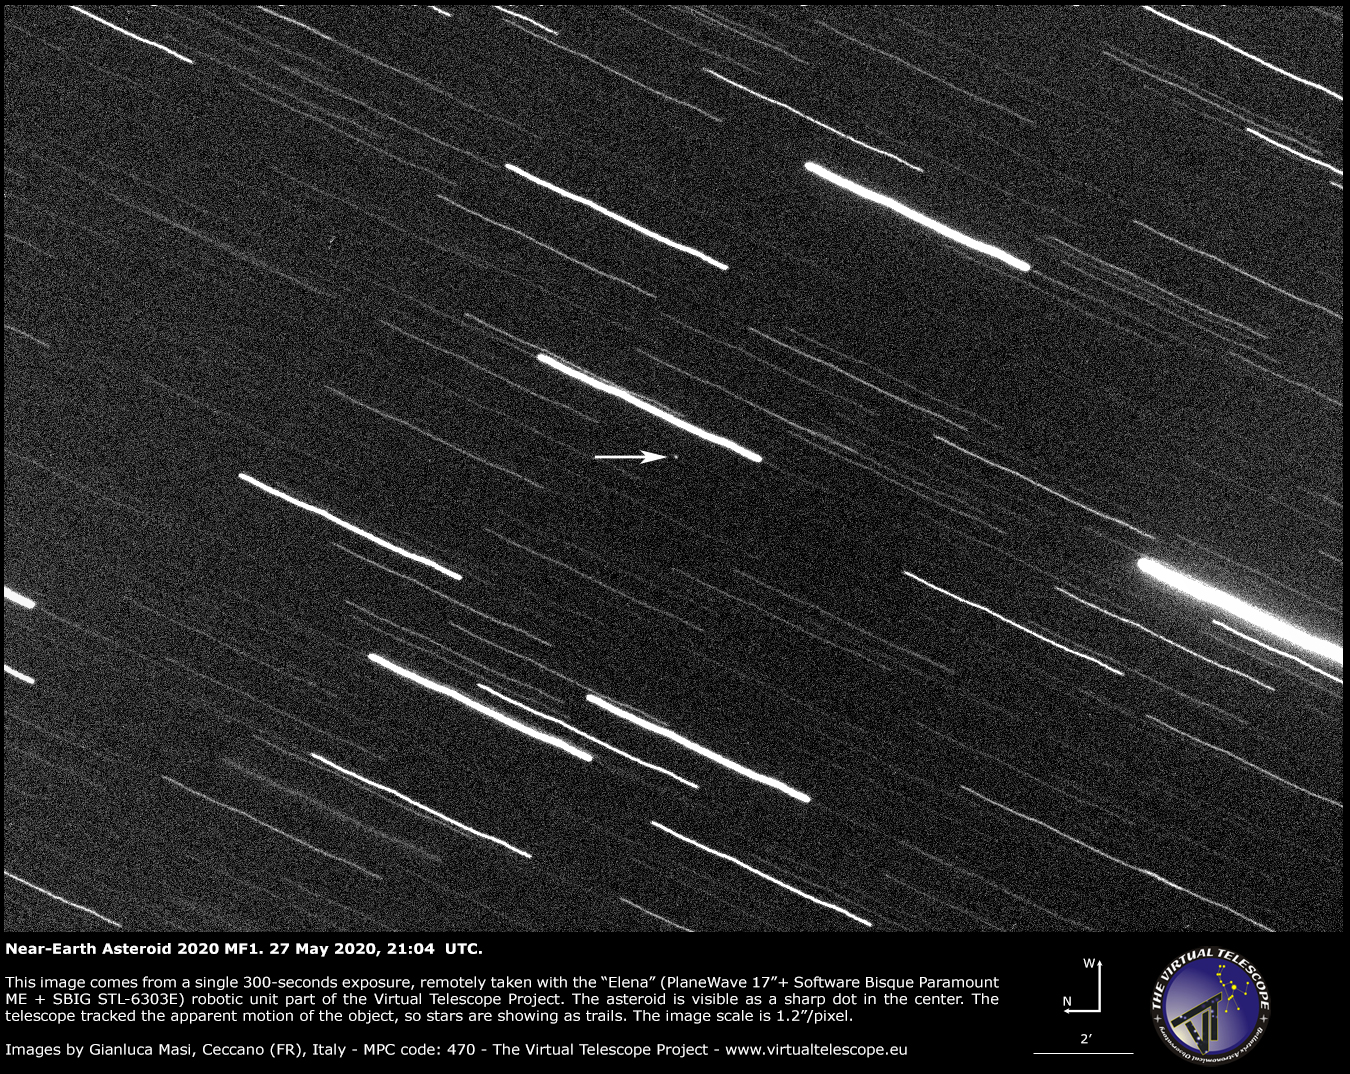 Near-Earth Asteroid 2020 MF1 - 26 June 2020.